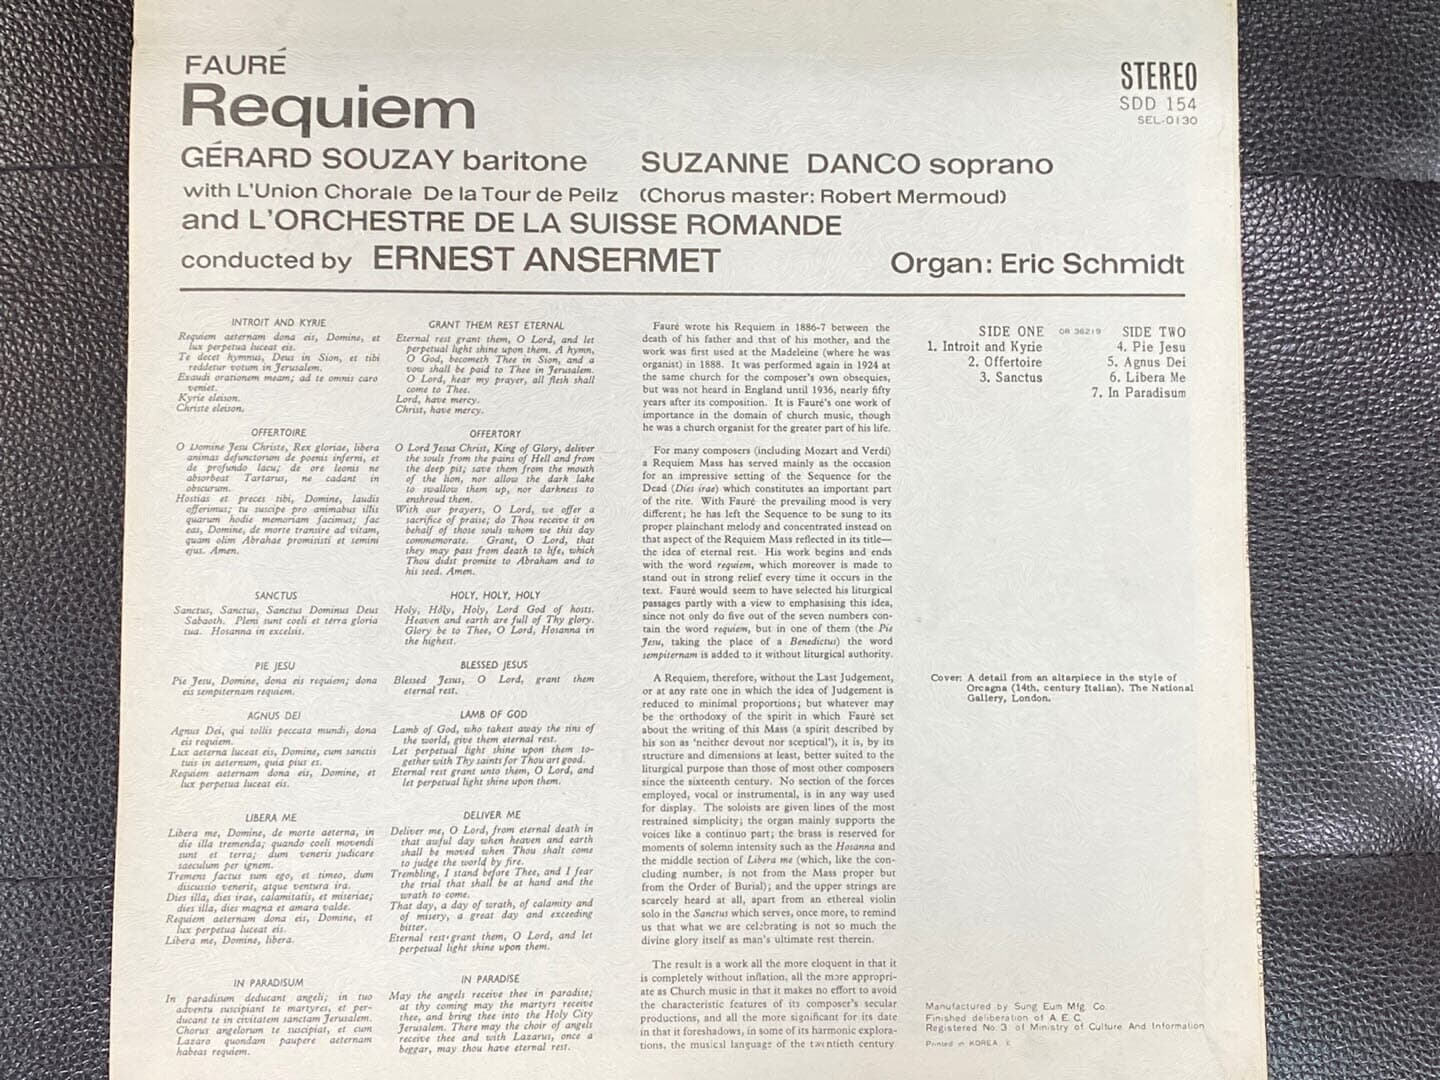 [LP] 에르네스트 앙세르메 - Ernest Ansermet - Faure Requiem LP [성음-라이센스반]